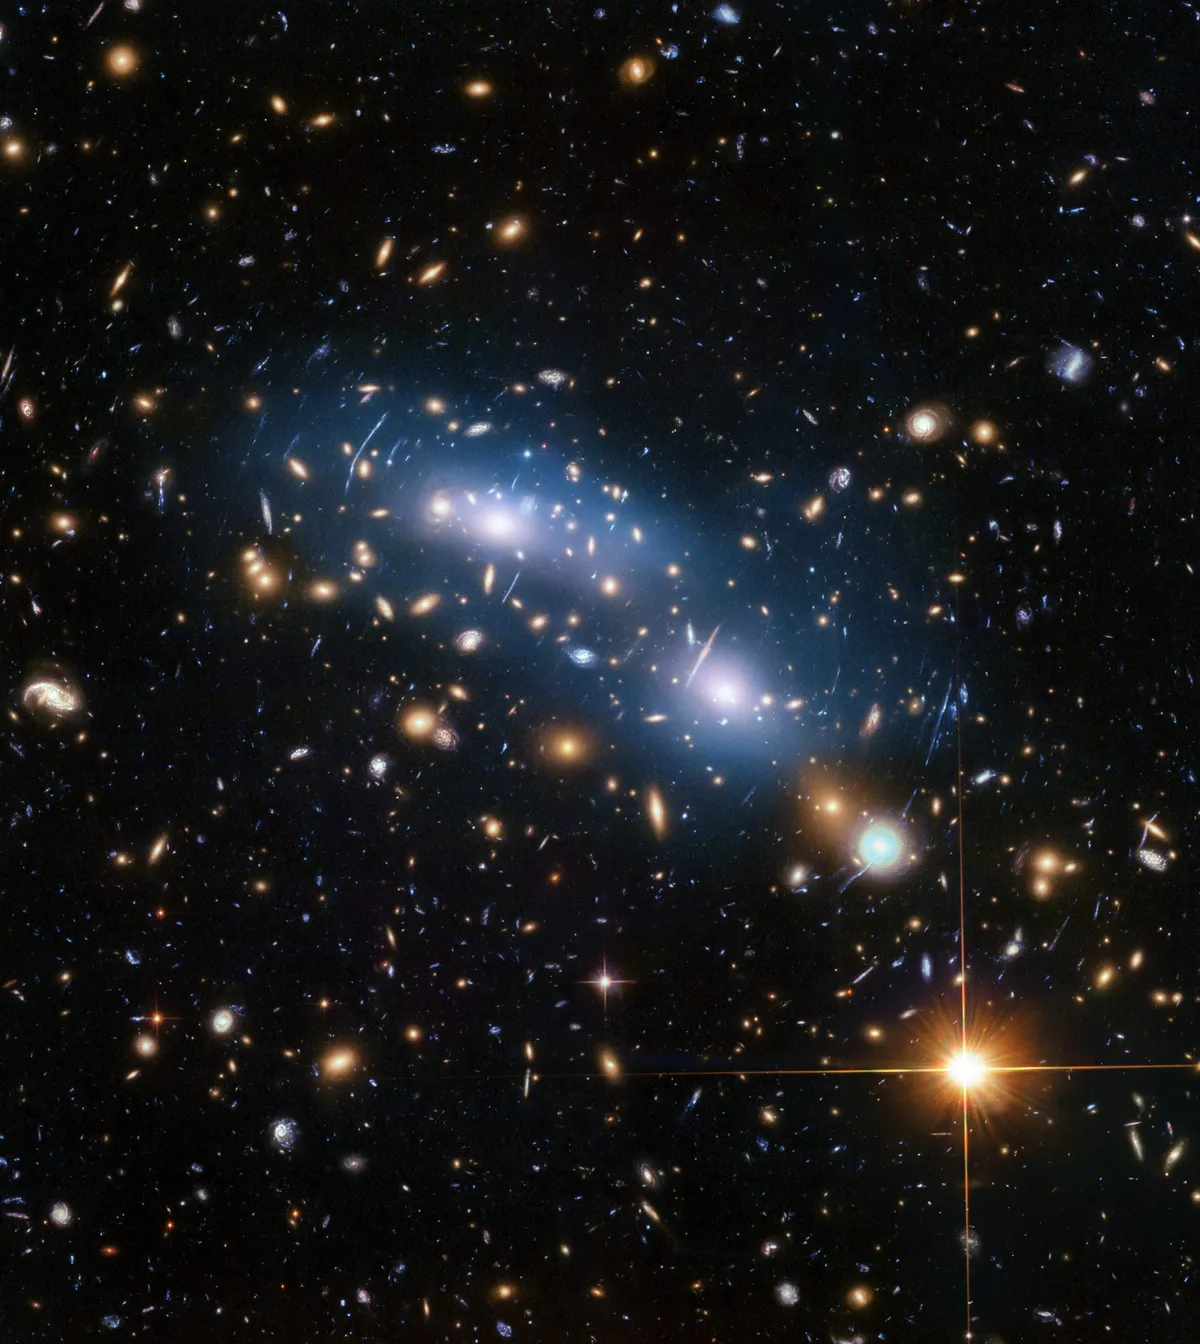 Galaxy cluster MACS J0416. Credit: NASA, ESA, and M. Montes (University of New South Wales, Sydney, Australia)